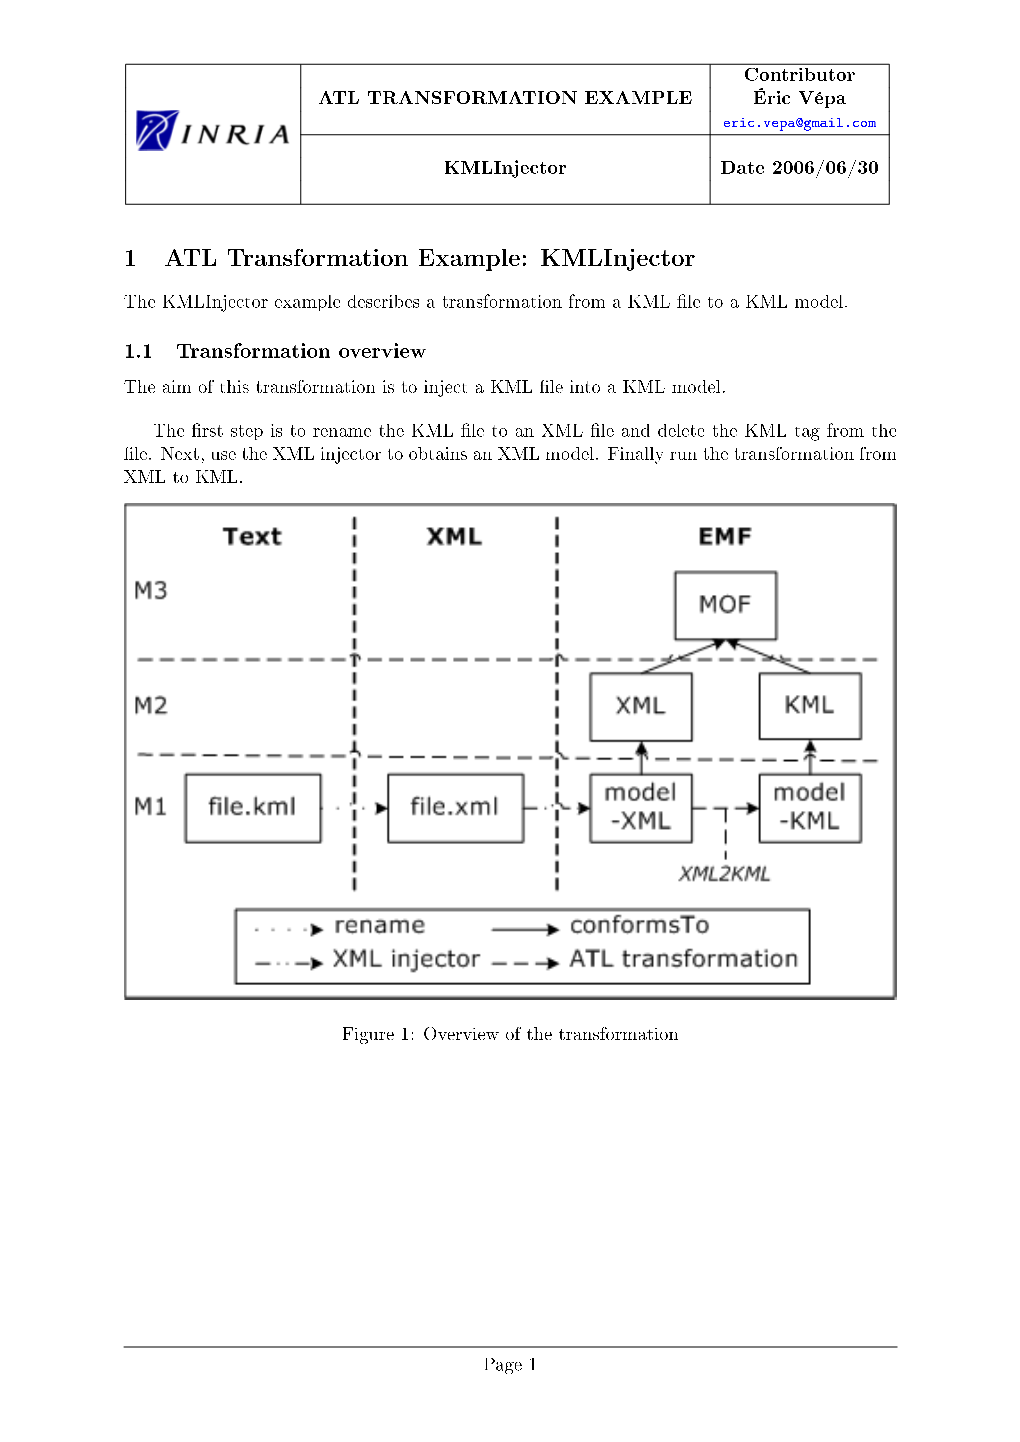 1 ATL Transformation Example: Kmlinjector